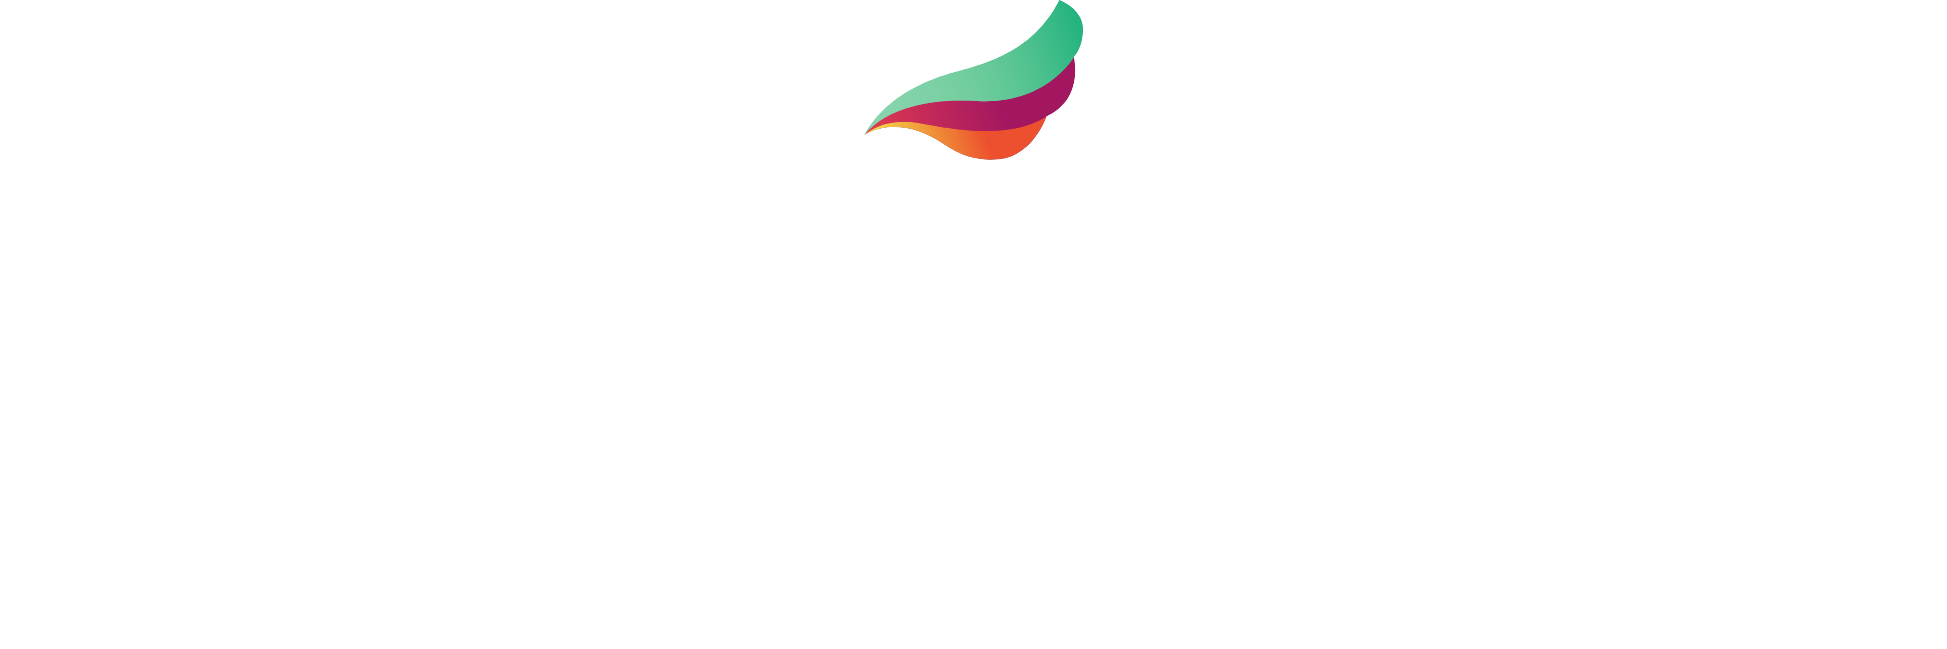 El Karma Hotels & Resorts